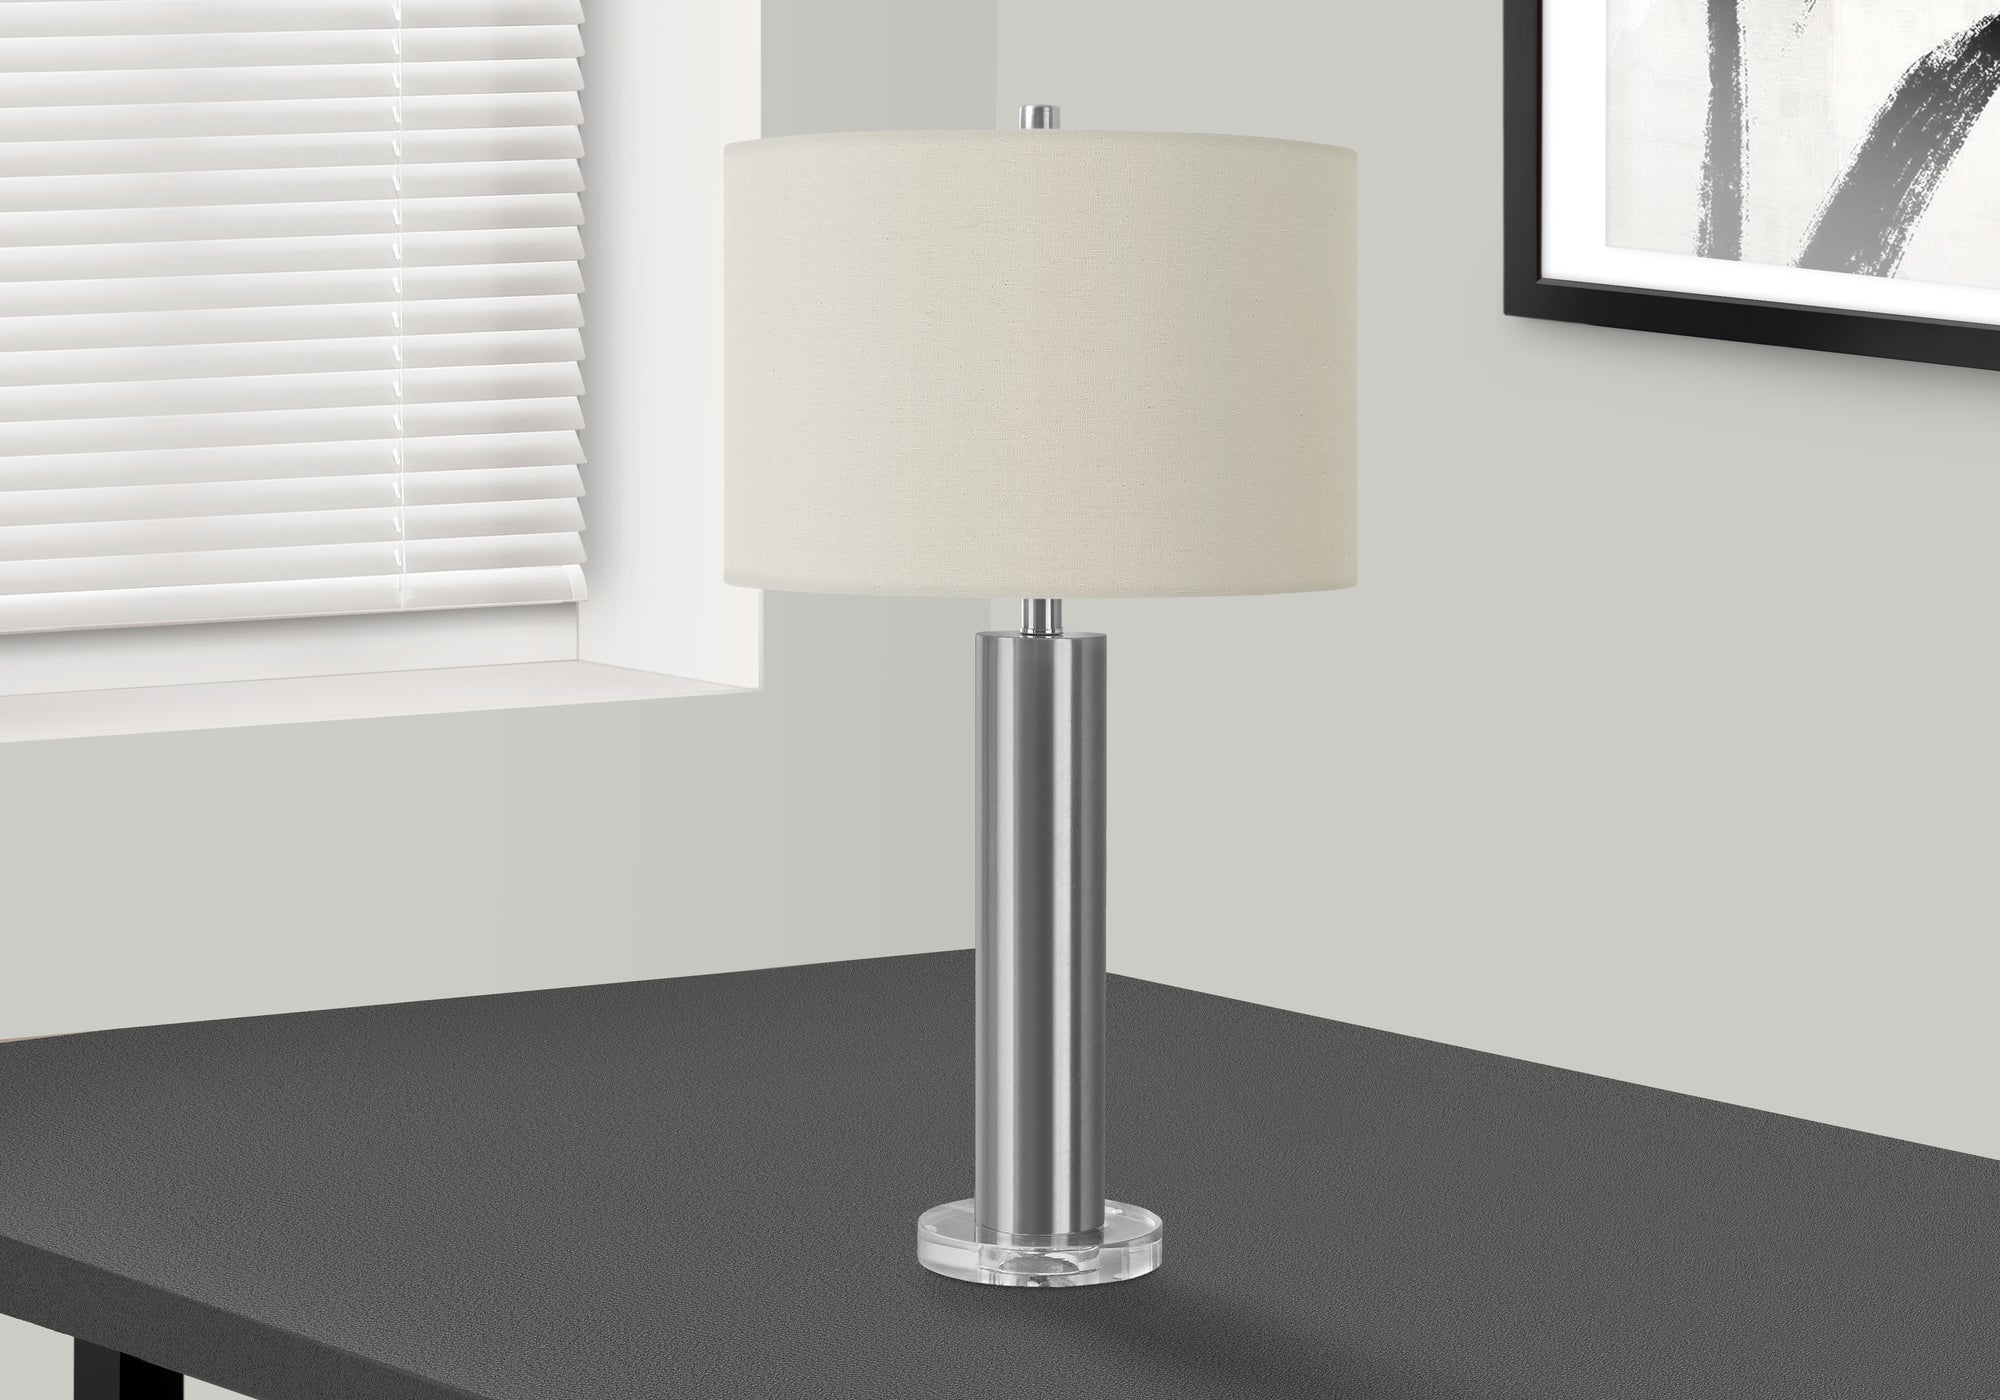 MN-329657    Lighting, 28"H, Table Lamp, Nickel Metal, Ivory / Cream Shade, Contemporary